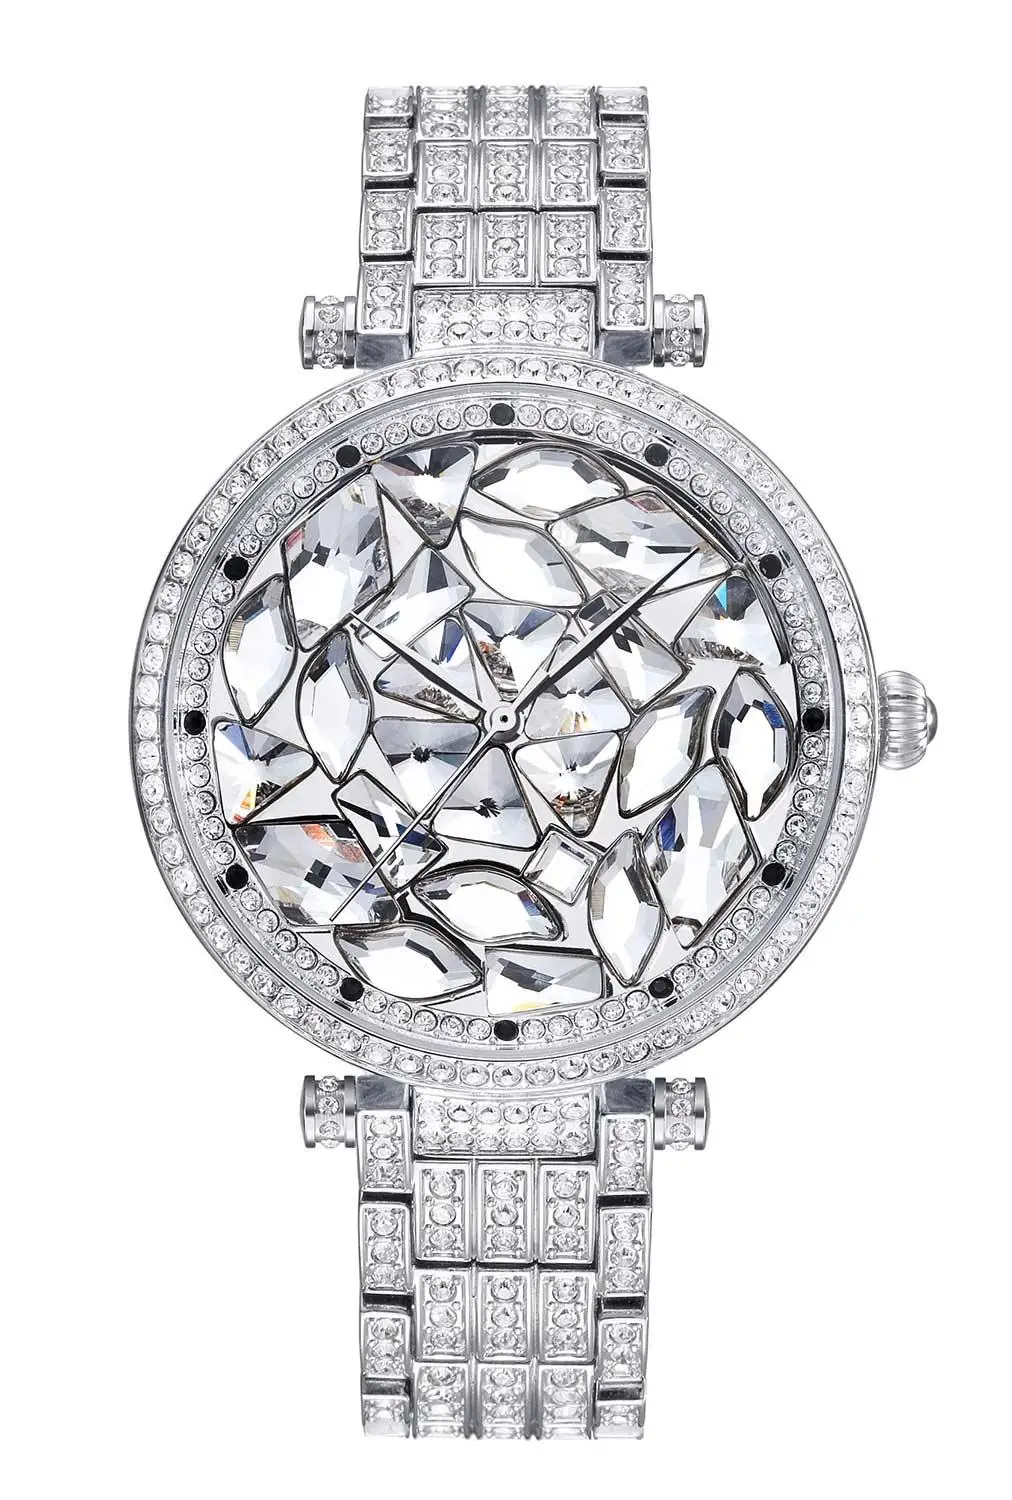 Princess Butterfly люксовый бренд часы женские наручные с кристаллами и позолотой, водонепроницаемые кварцевые watch women - Цвет: Silver